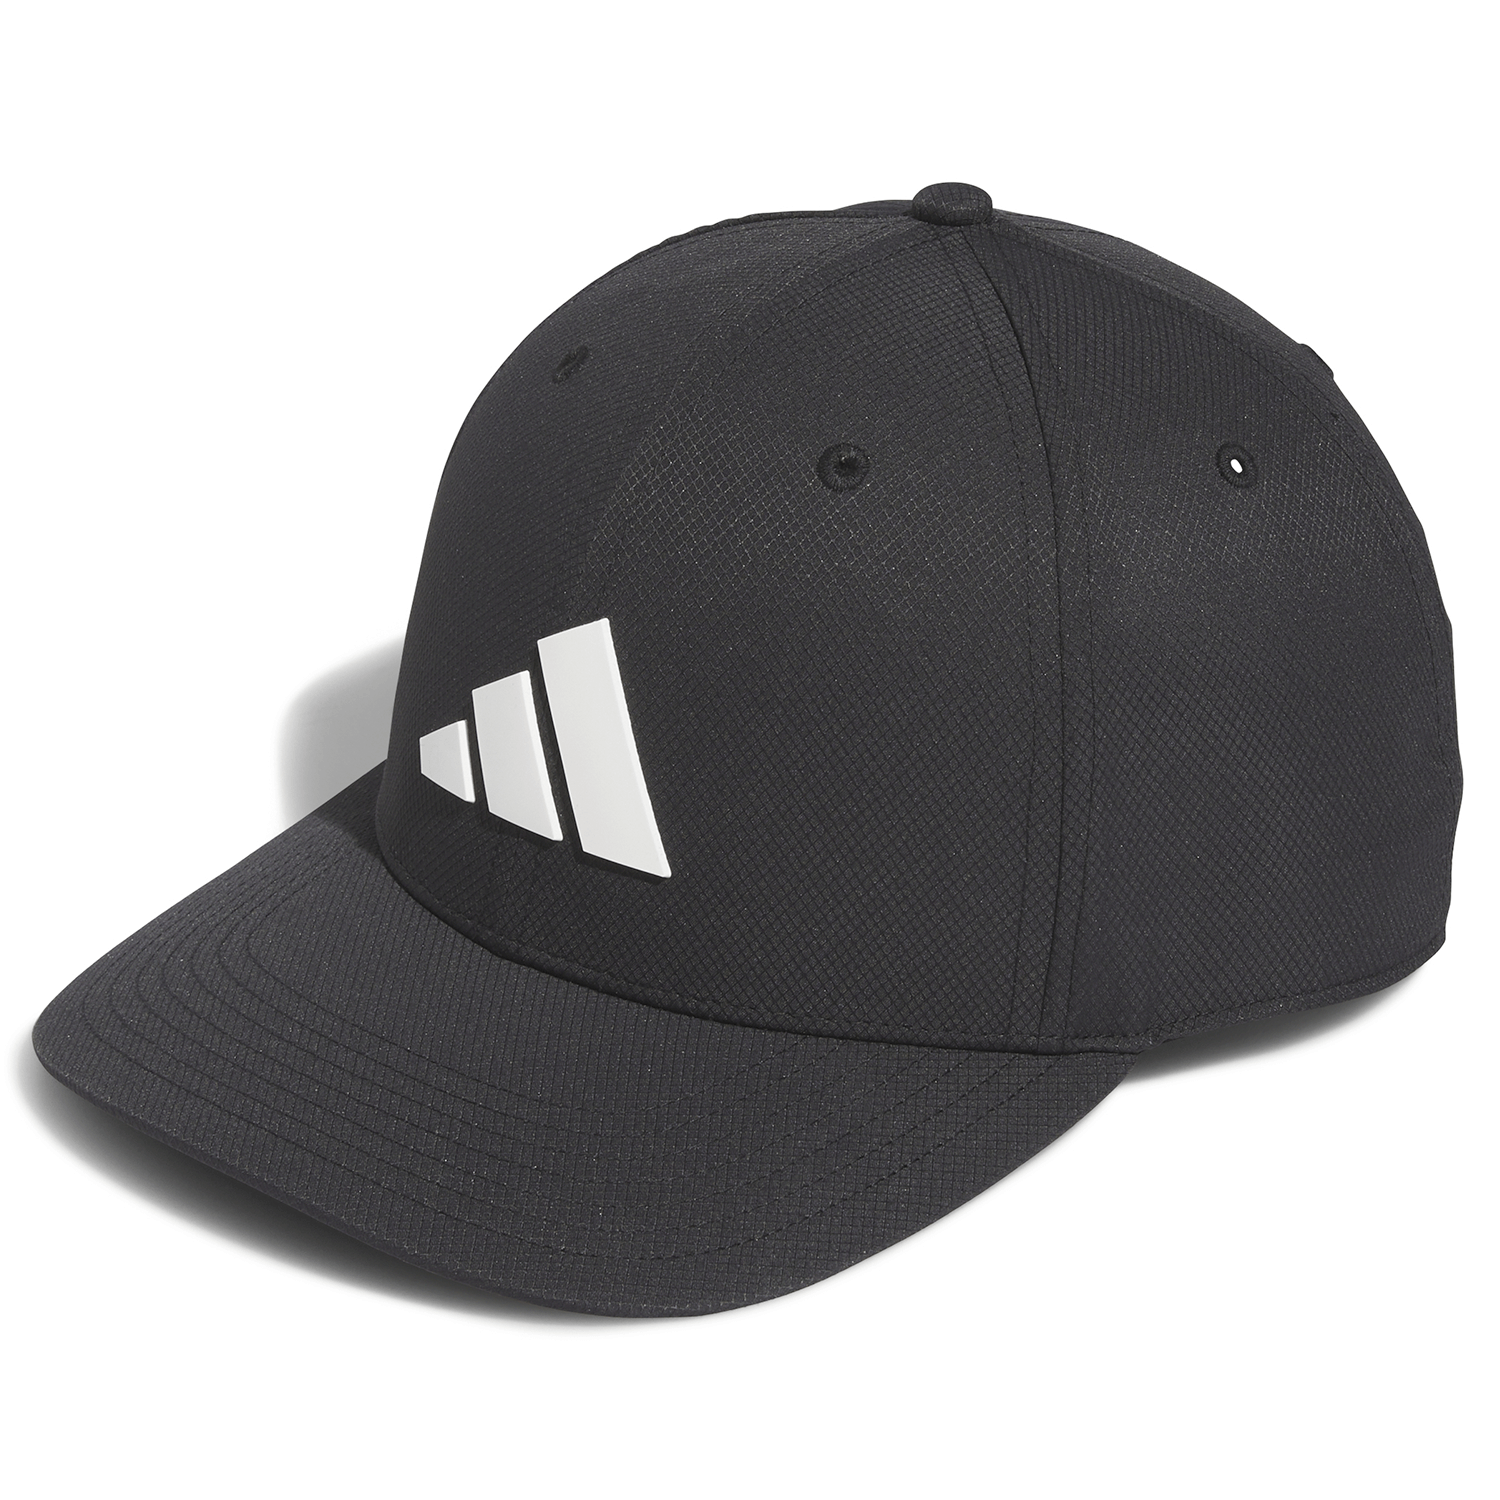 adidas Tour 3 Stripe Snapback Hat